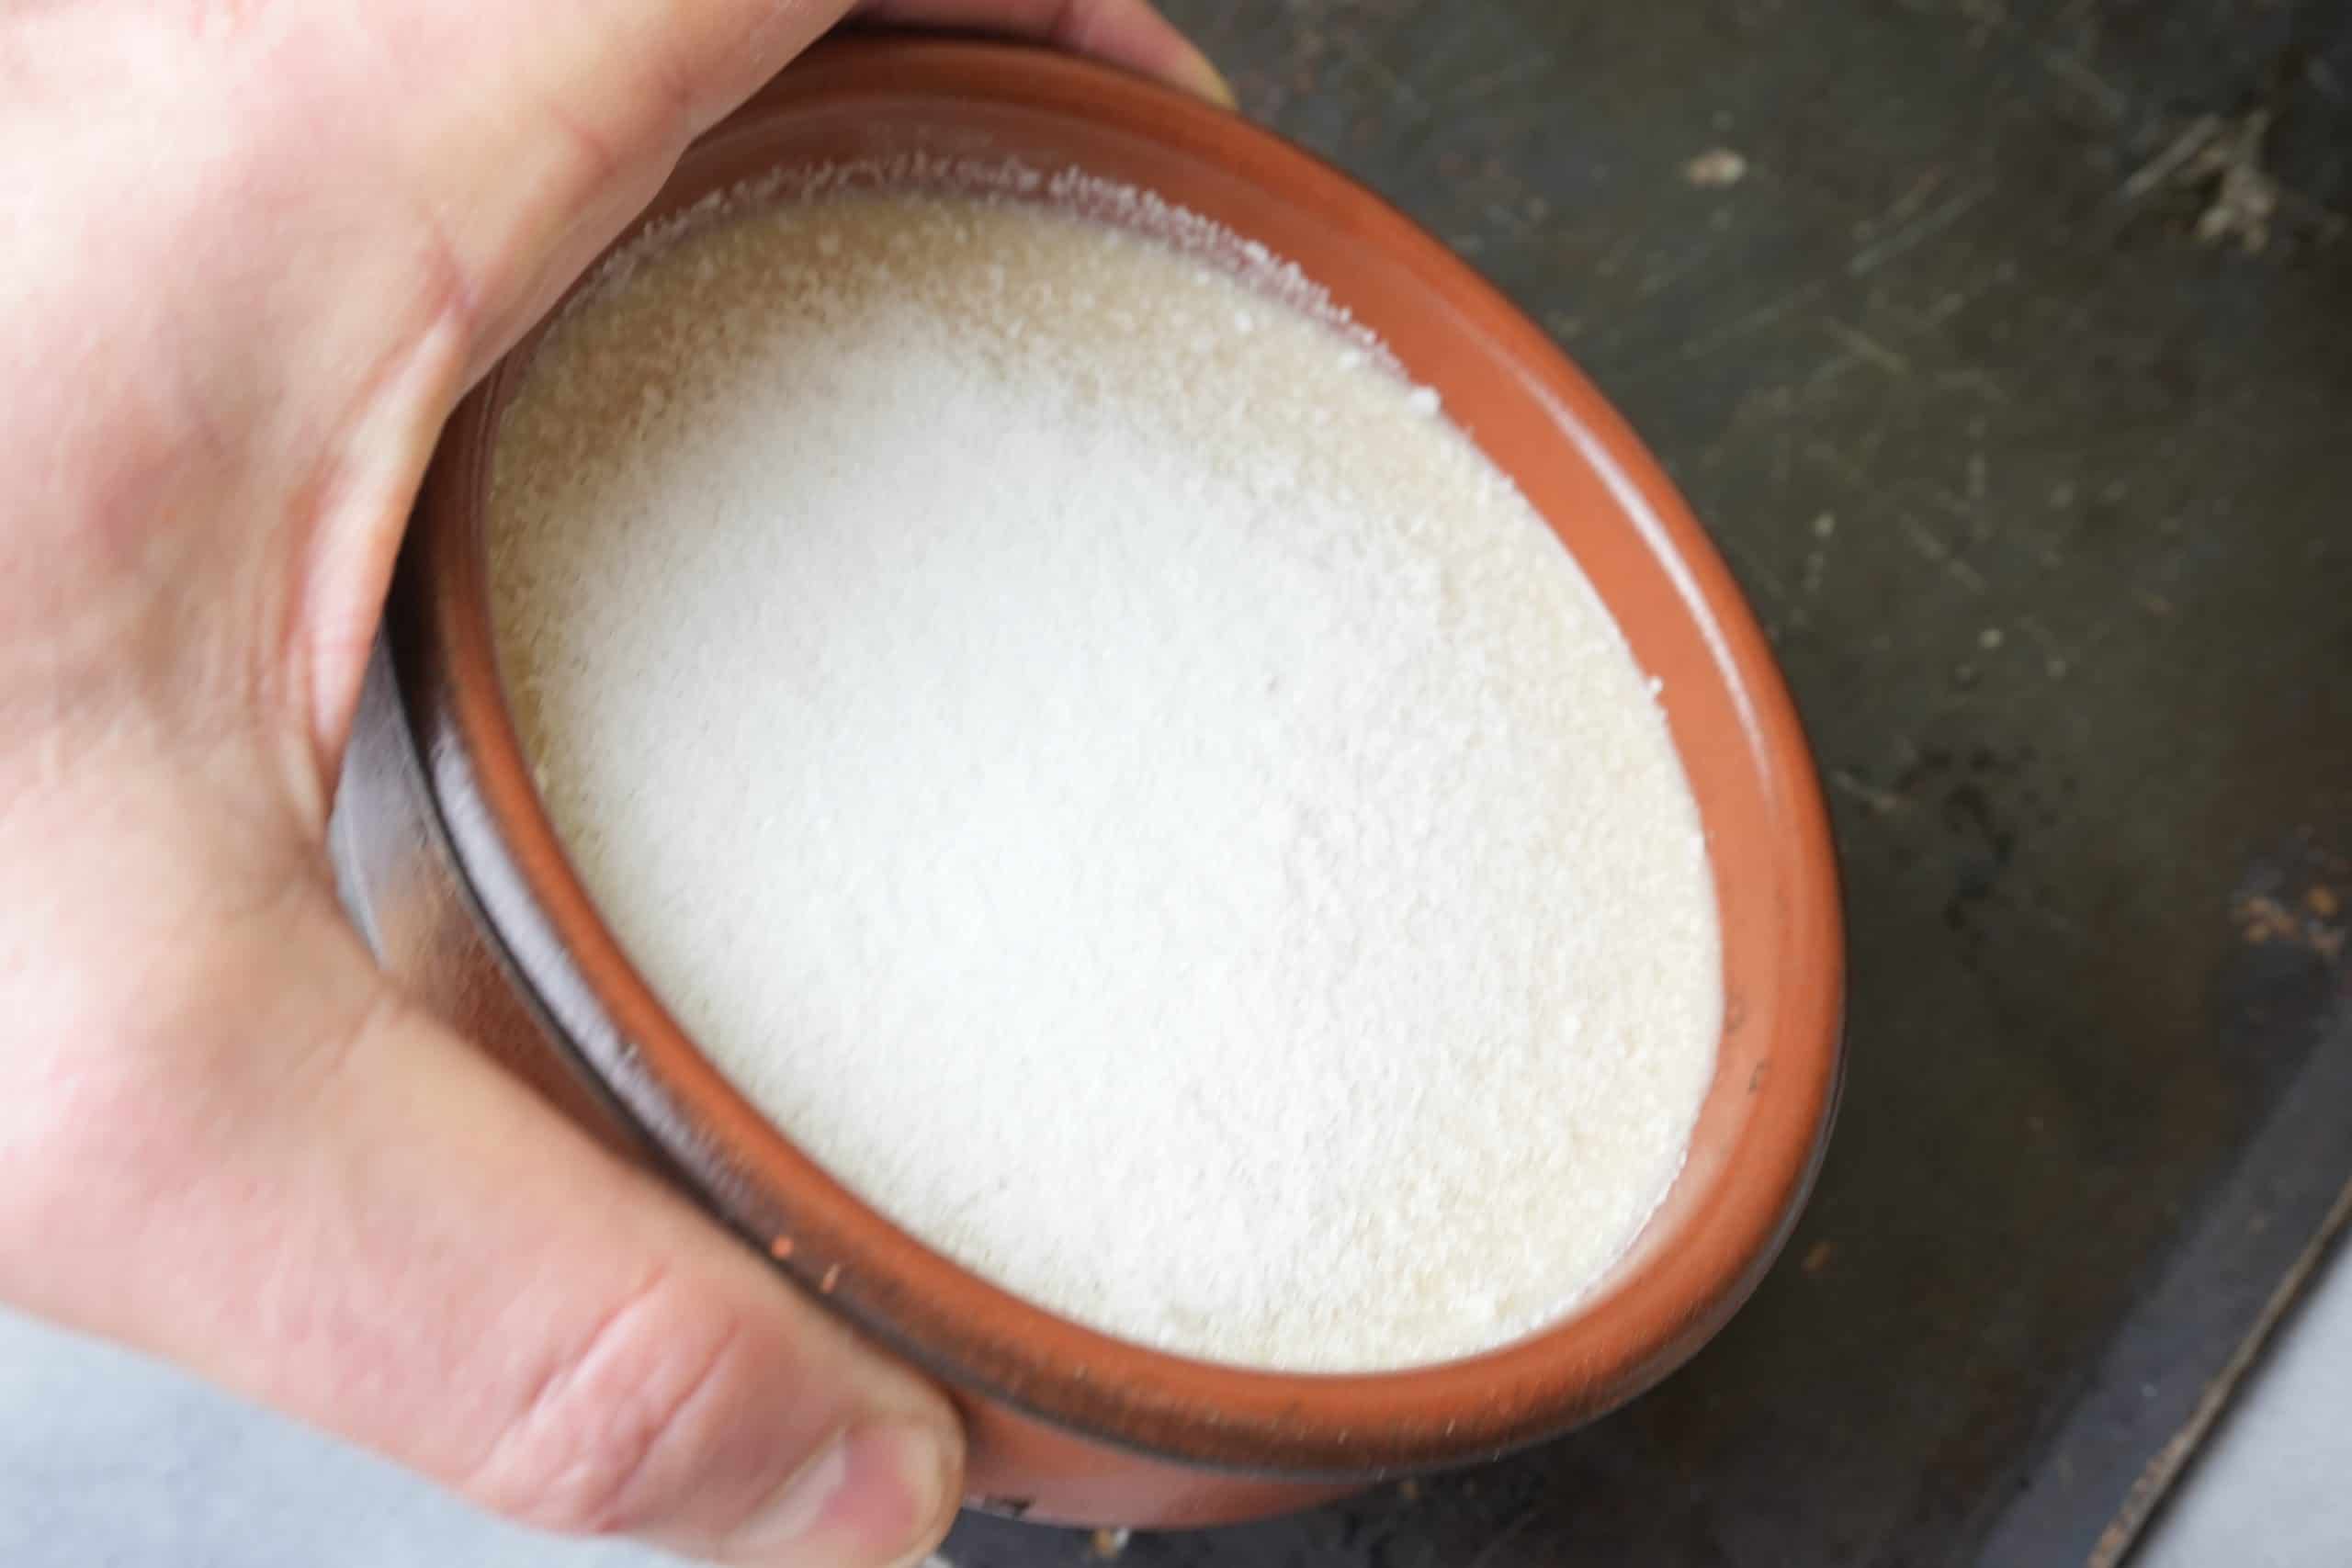 sugar being spread around a ramekin by tilting